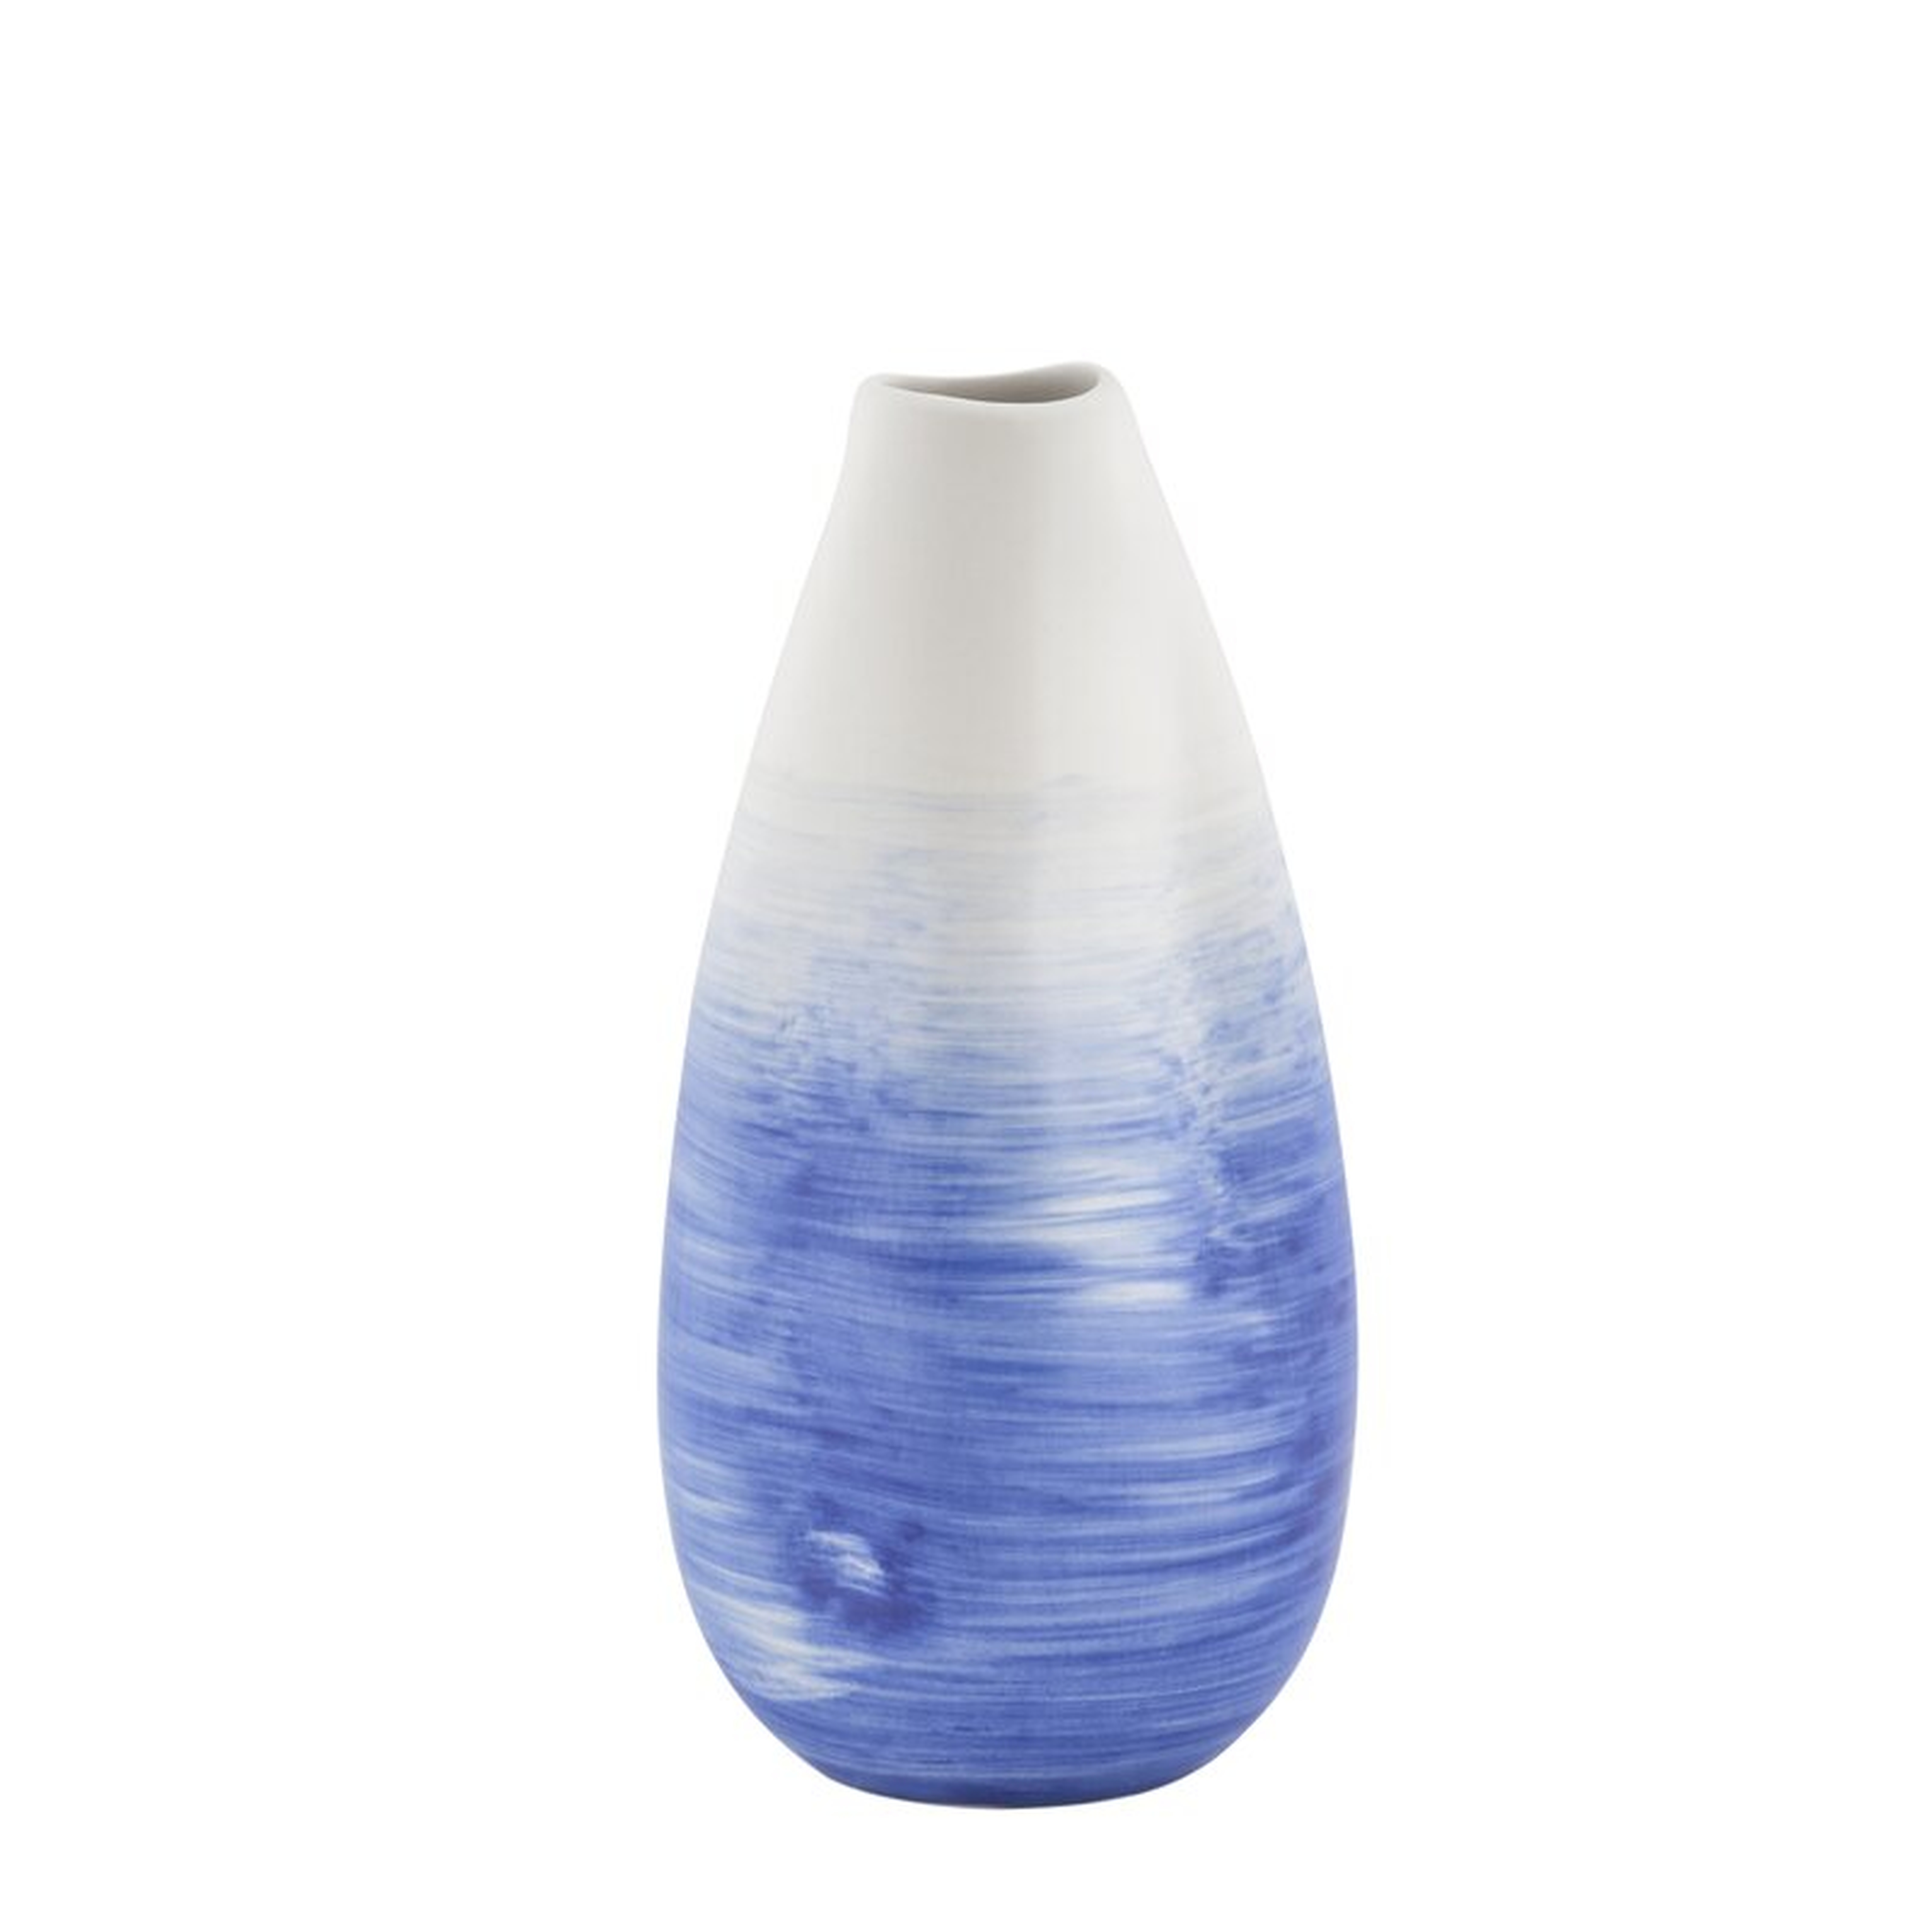 Legend of Asia Indoor / Outdoor Porcelain Table Vase - Perigold